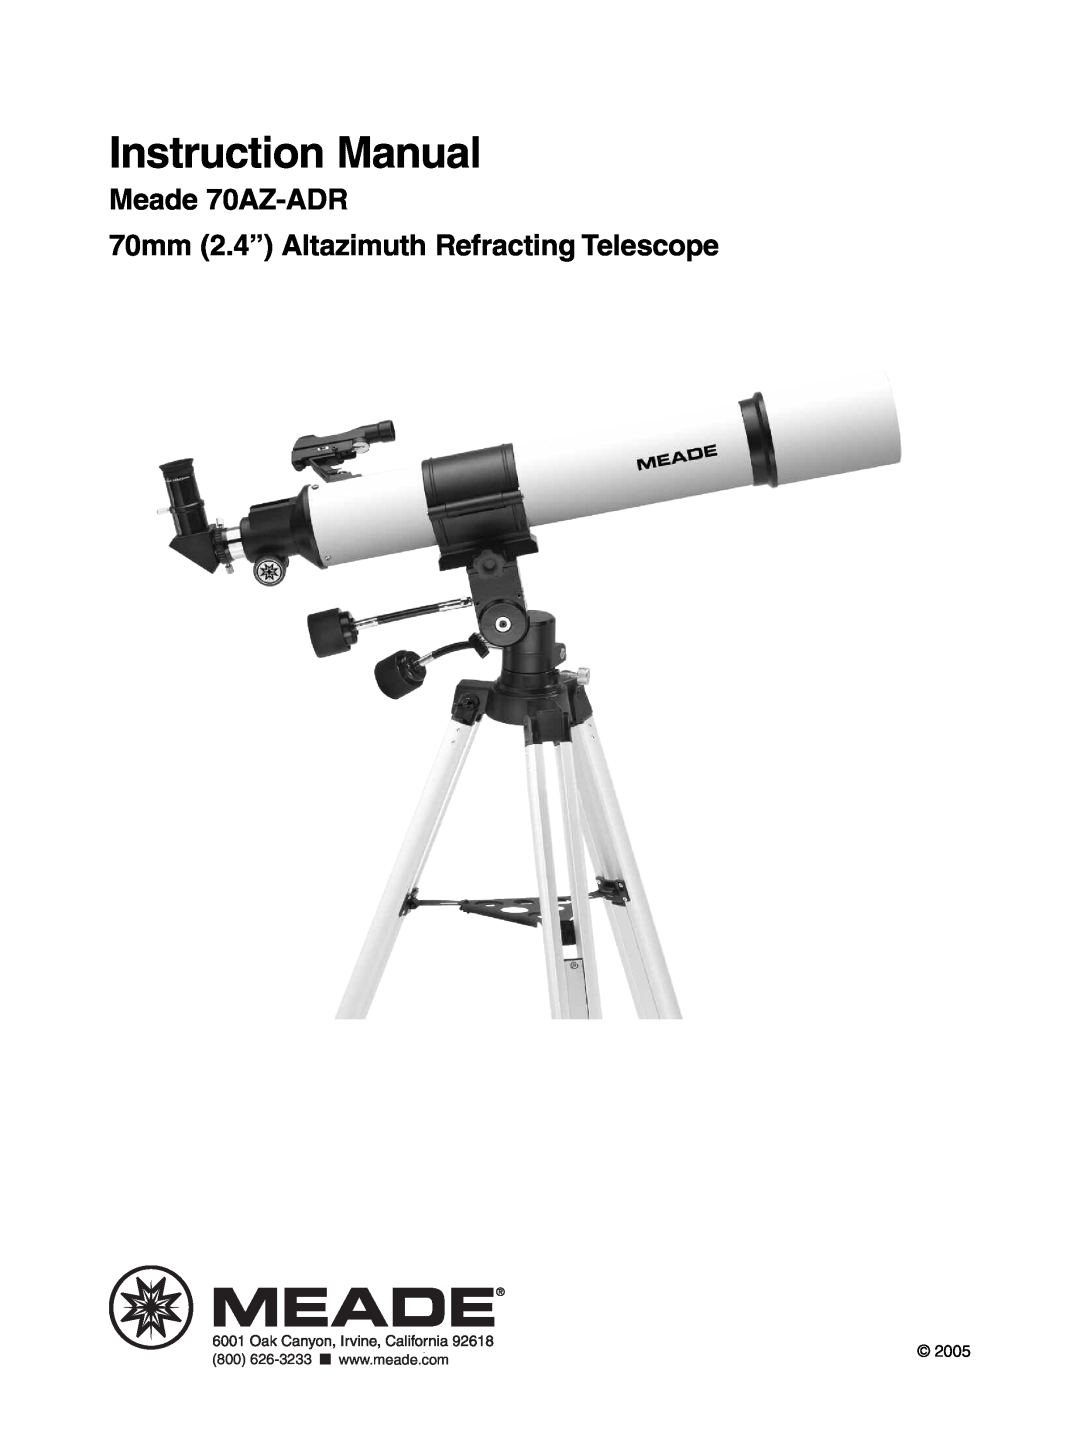 Meade instruction manual Meade 70AZ-ADR, 70mm 2.4” Altazimuth Refracting Telescope 